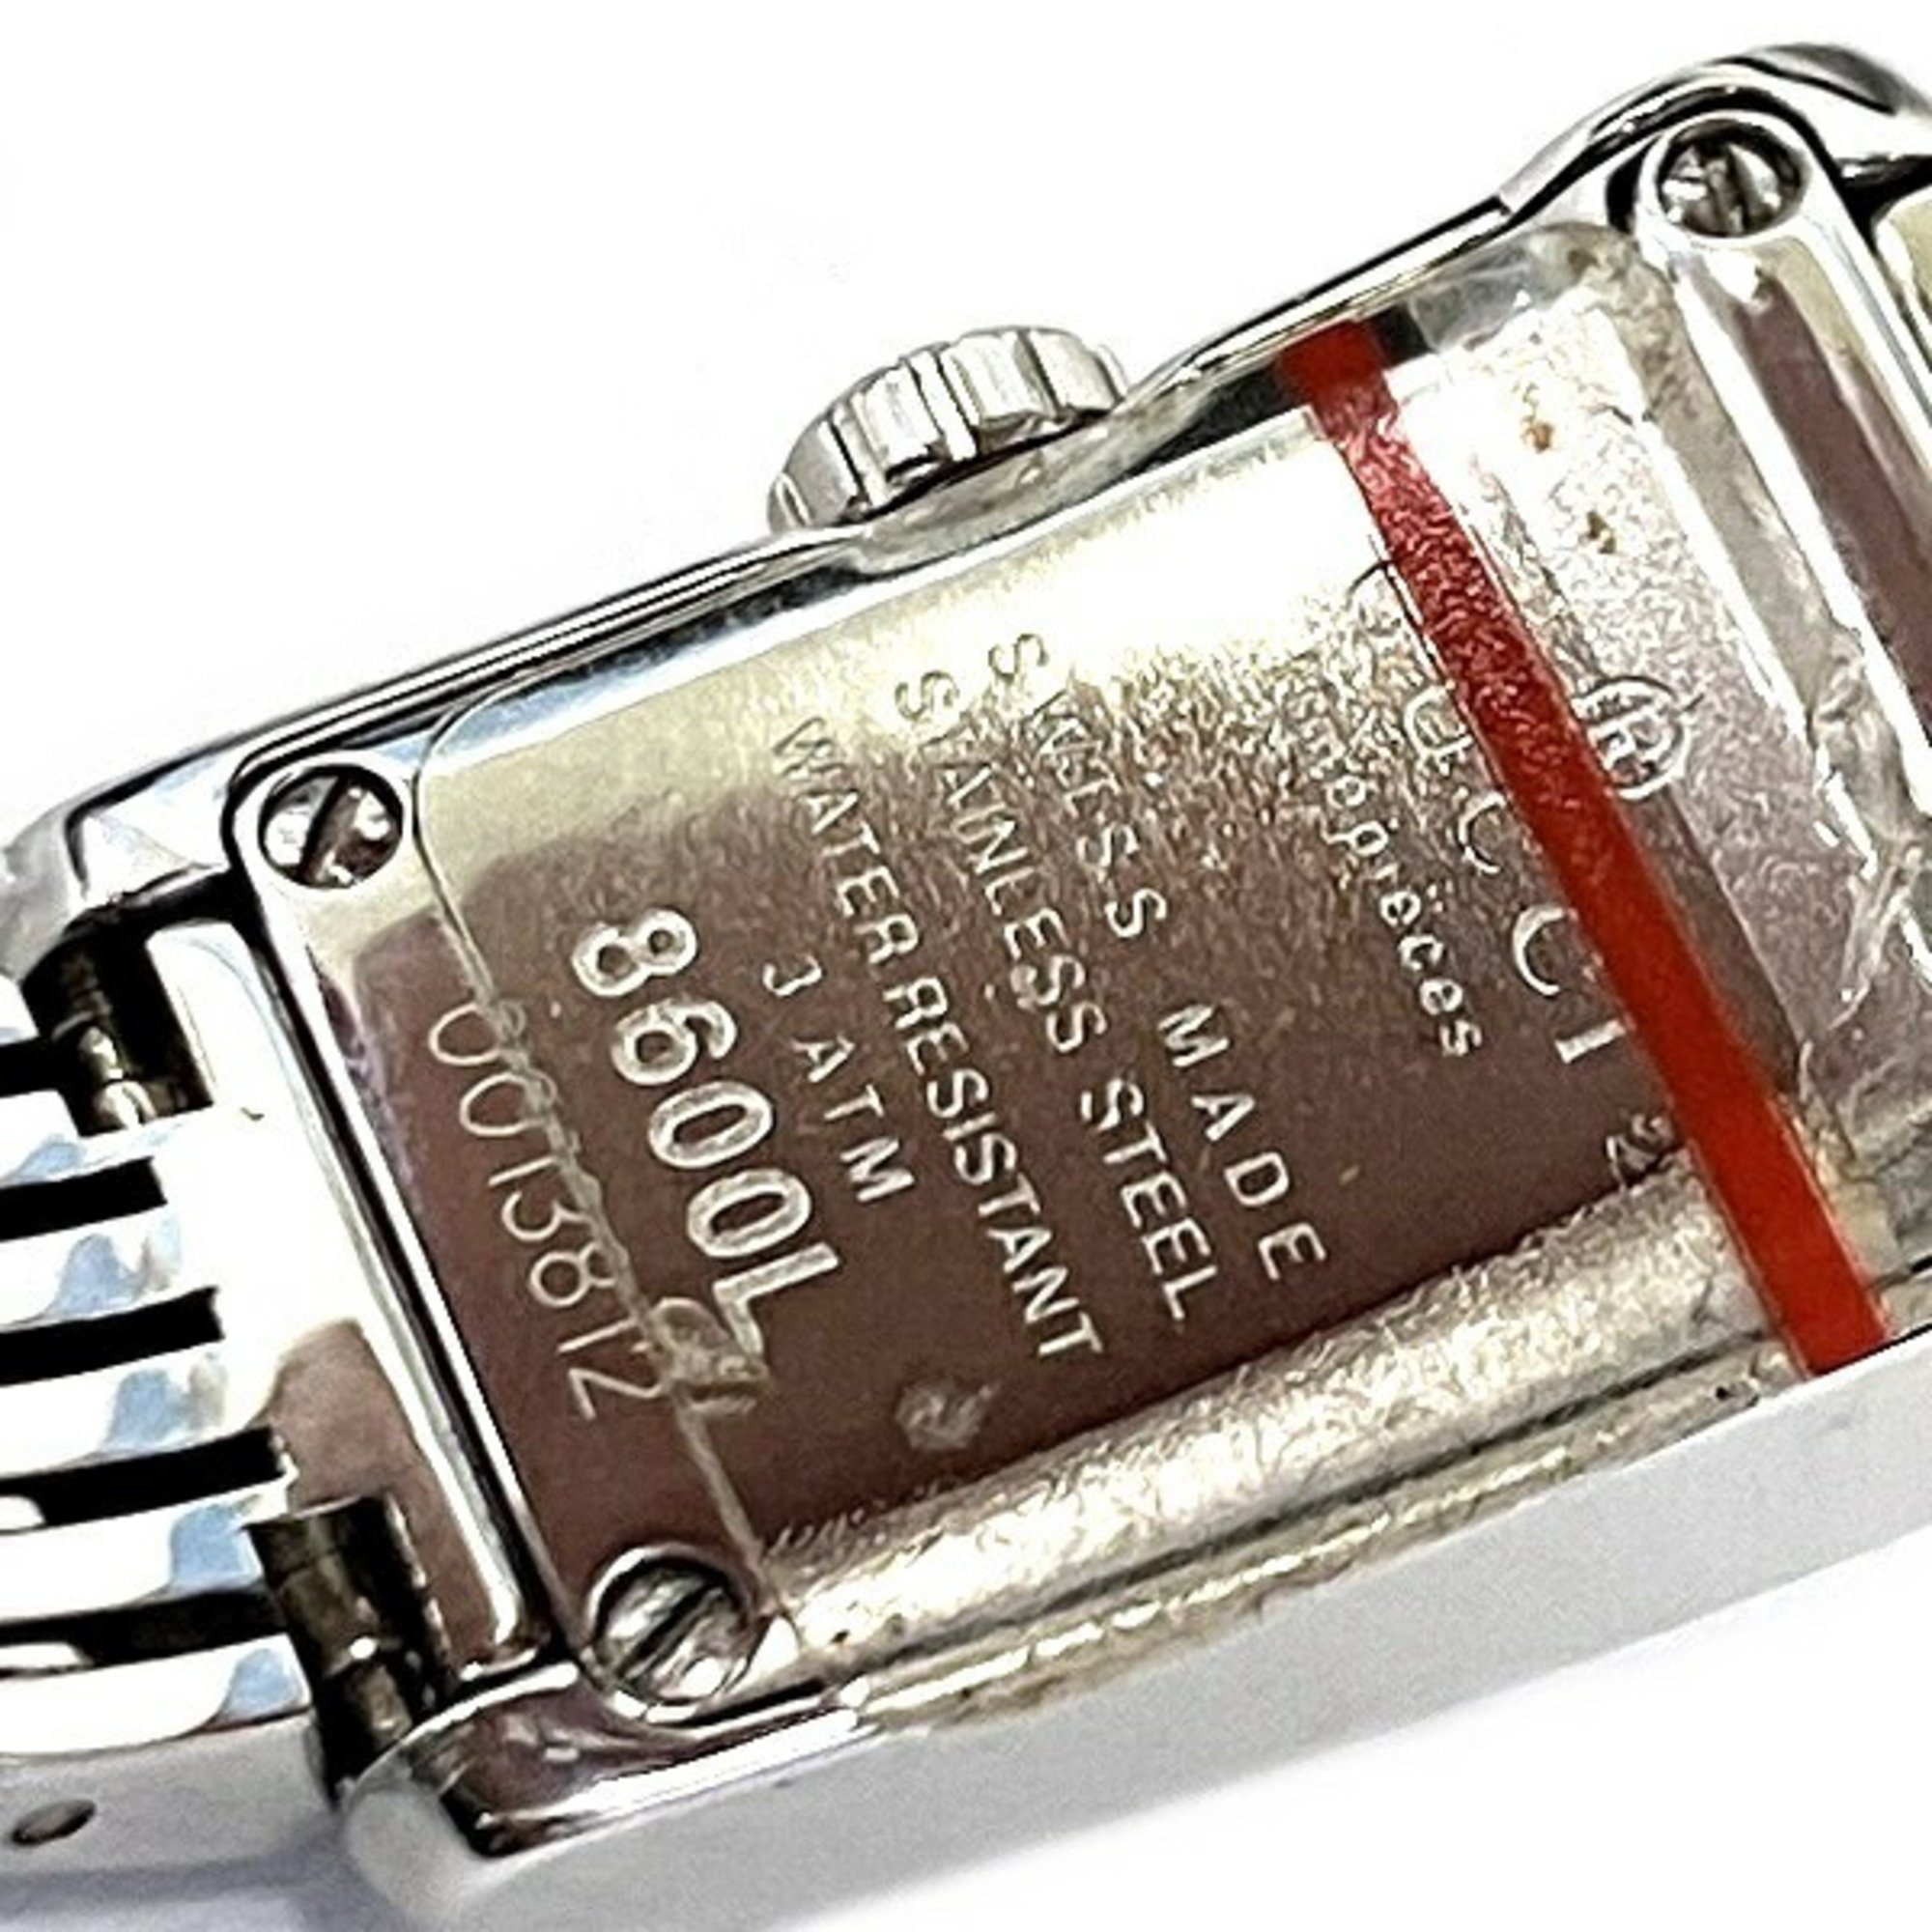 GUCCI G Metro 8600L Quartz Diamond Bezel Watch Ladies